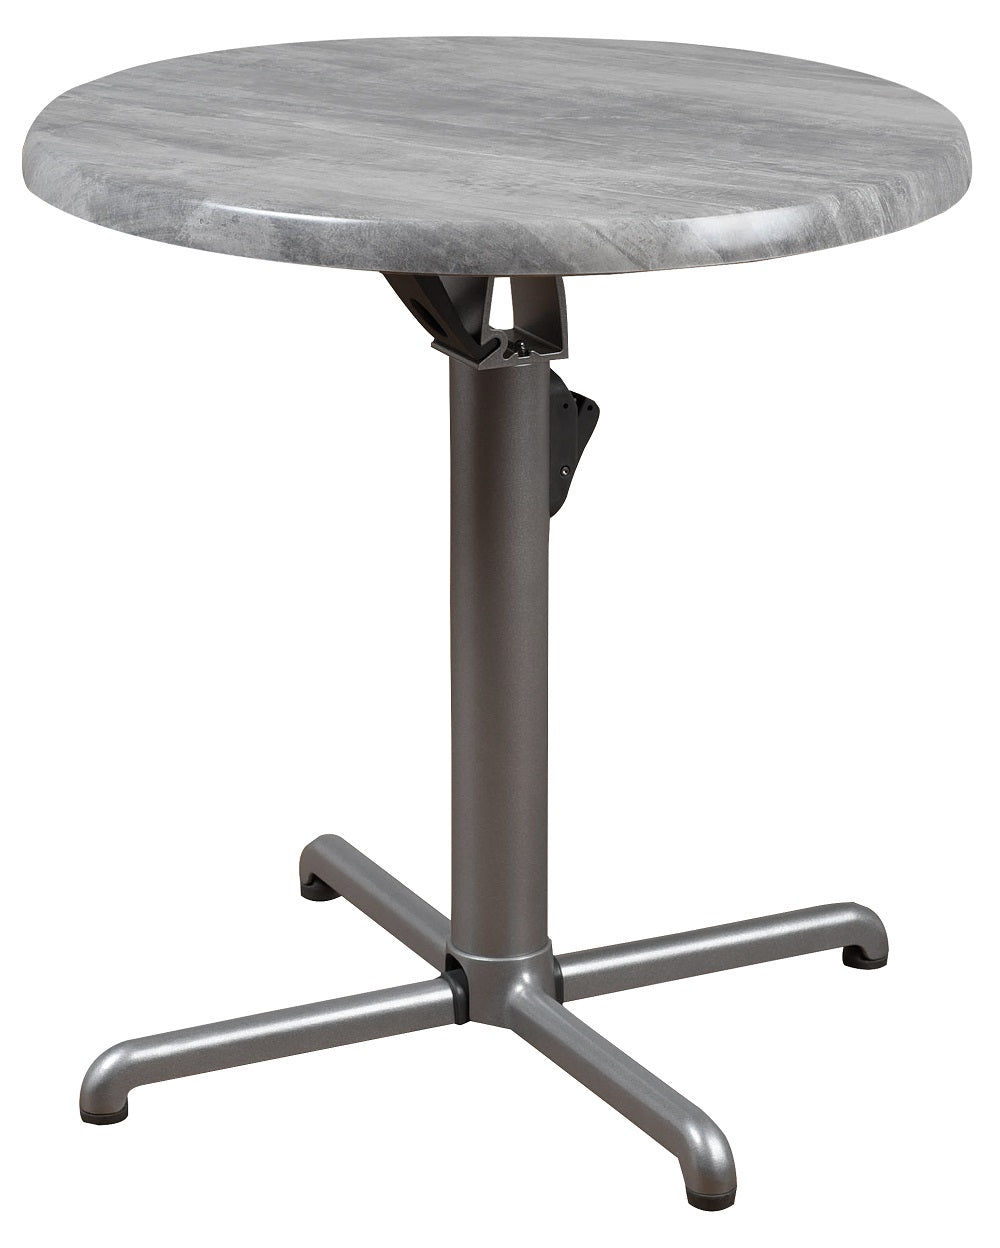 Veendam Round Aluminum Patio Folding Dining Table - Gray